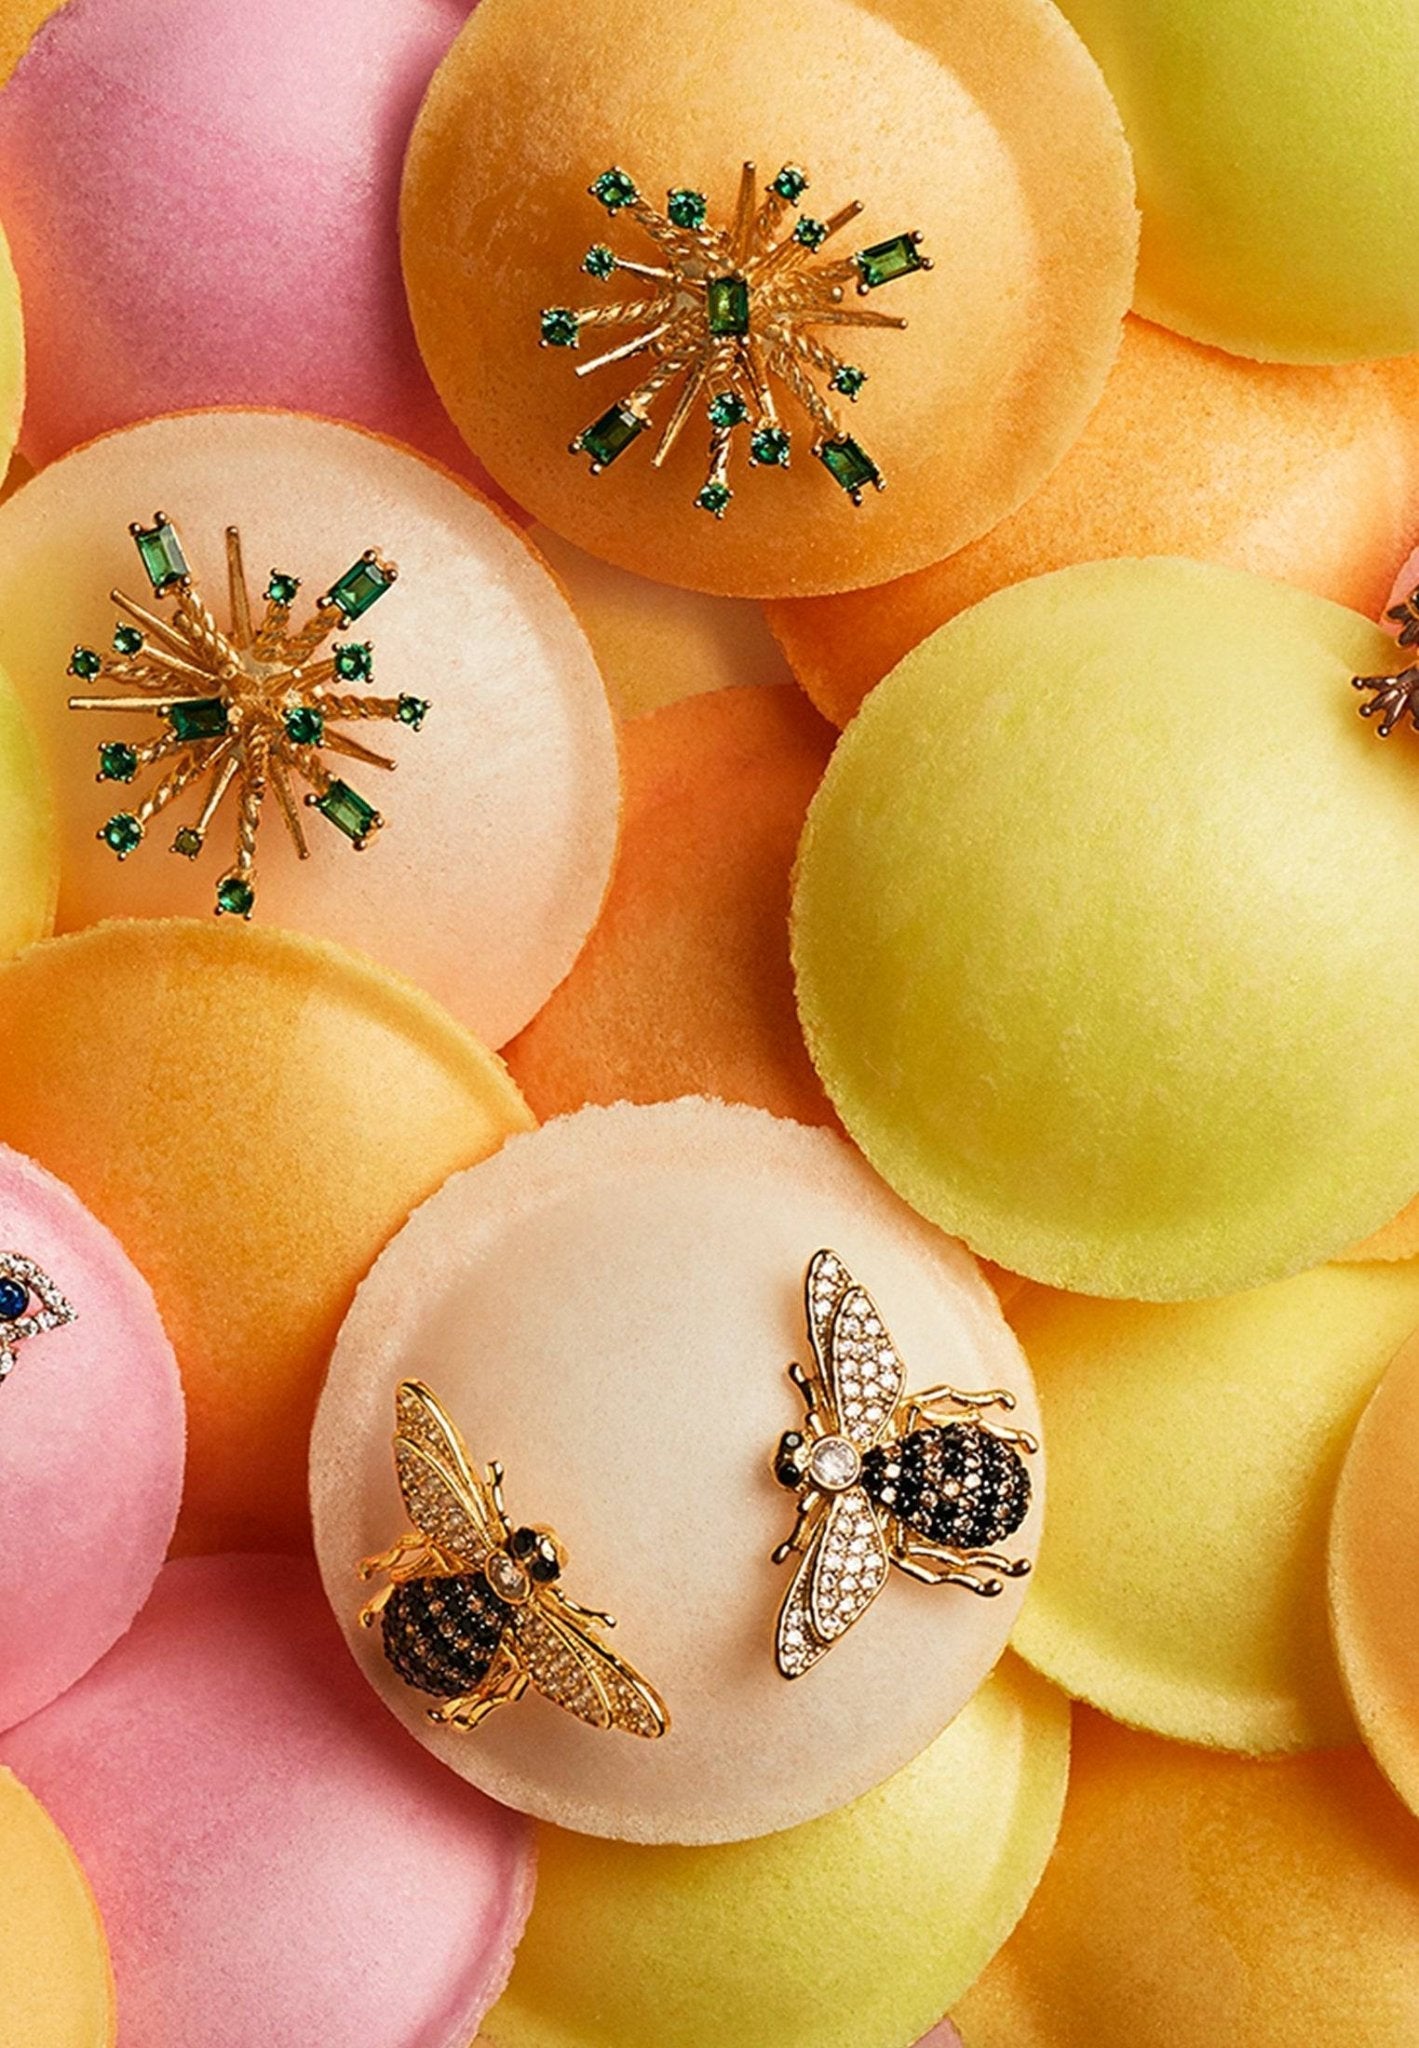 Honey Bee Stud Earrings Gold - Sparkly, Symbol of Hope & Abundance - Desire & Hope